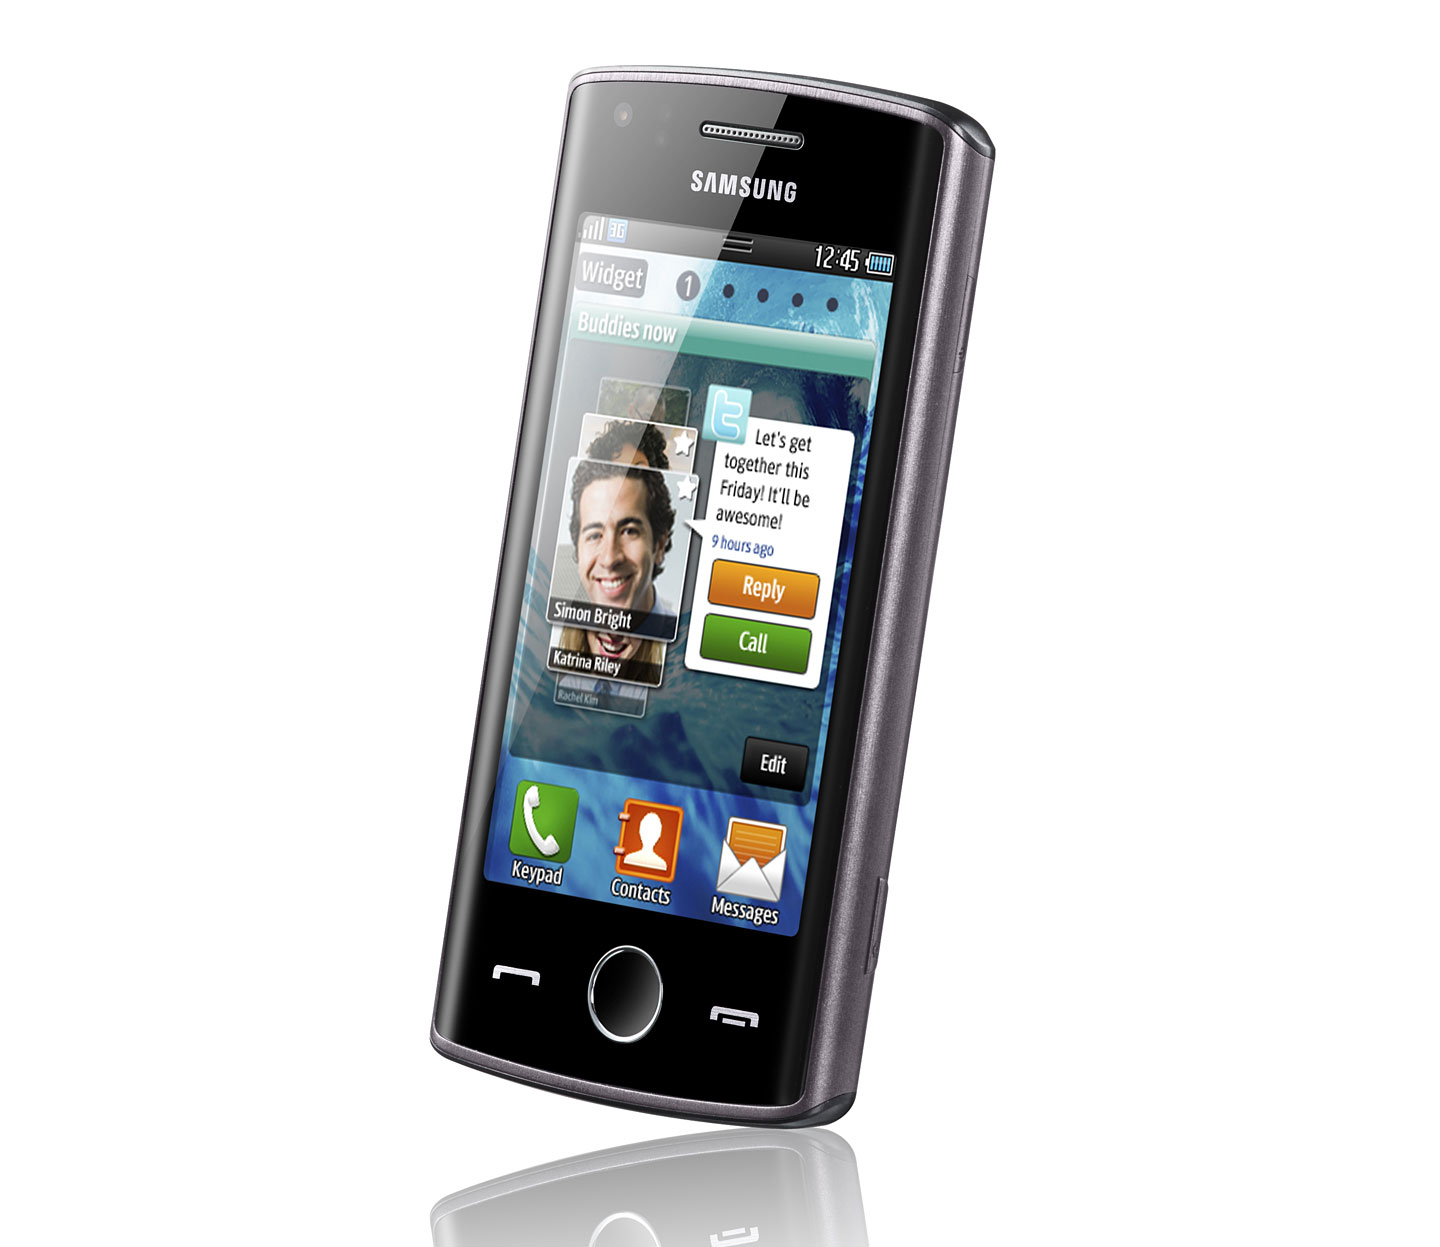 Samsung Wave 578, smartphone con Bada #MWC